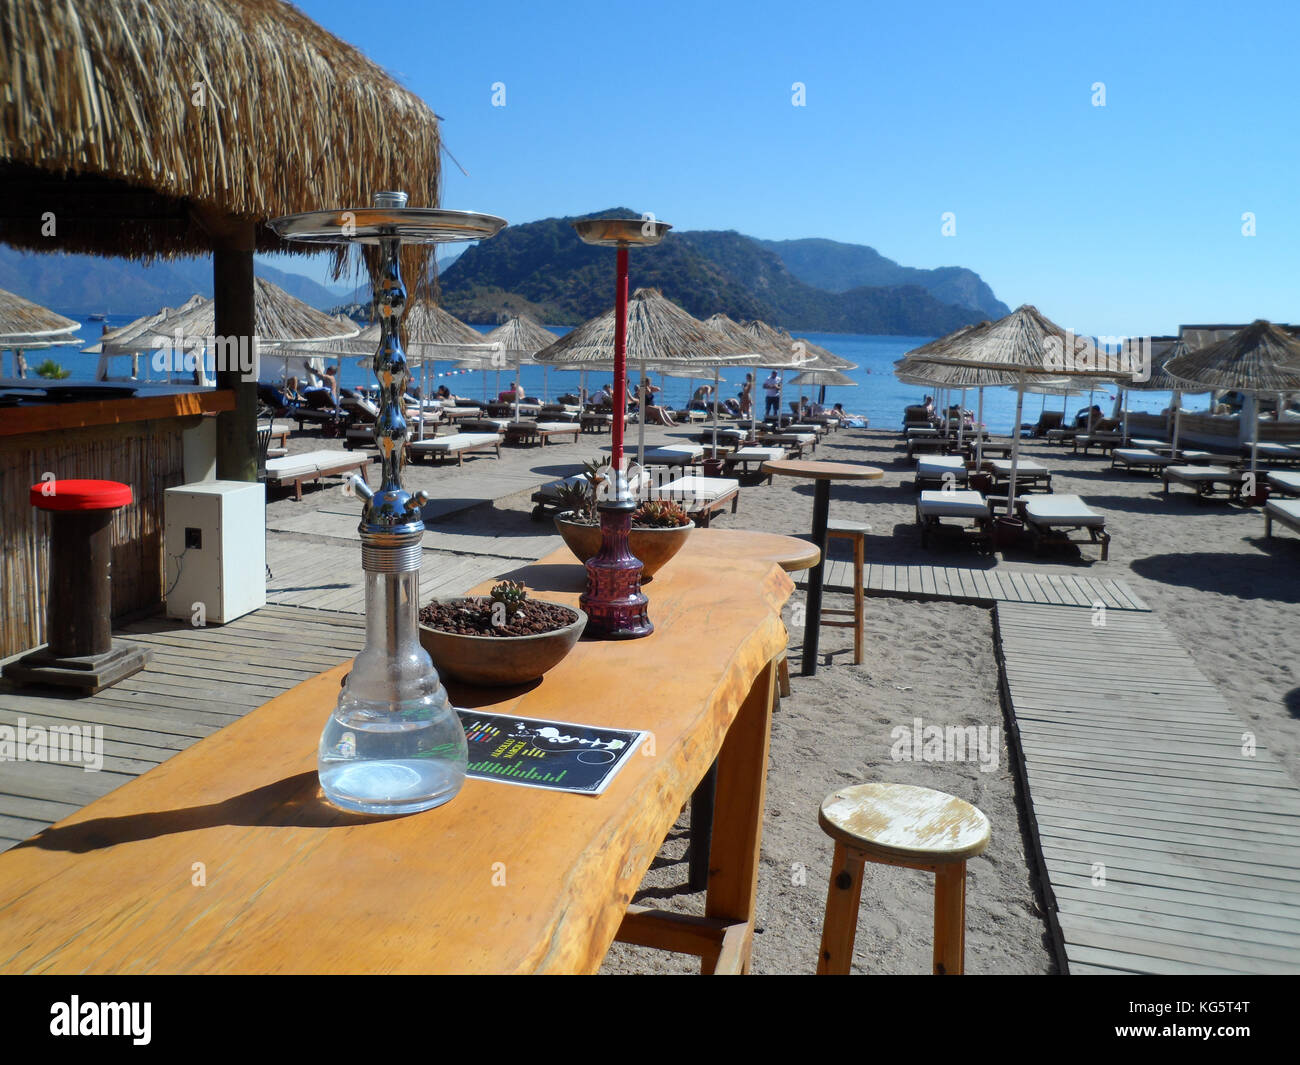 One of the many beach bars on the public beach at Icmeler, Mugla province, Turkey, Europe Stock Photo